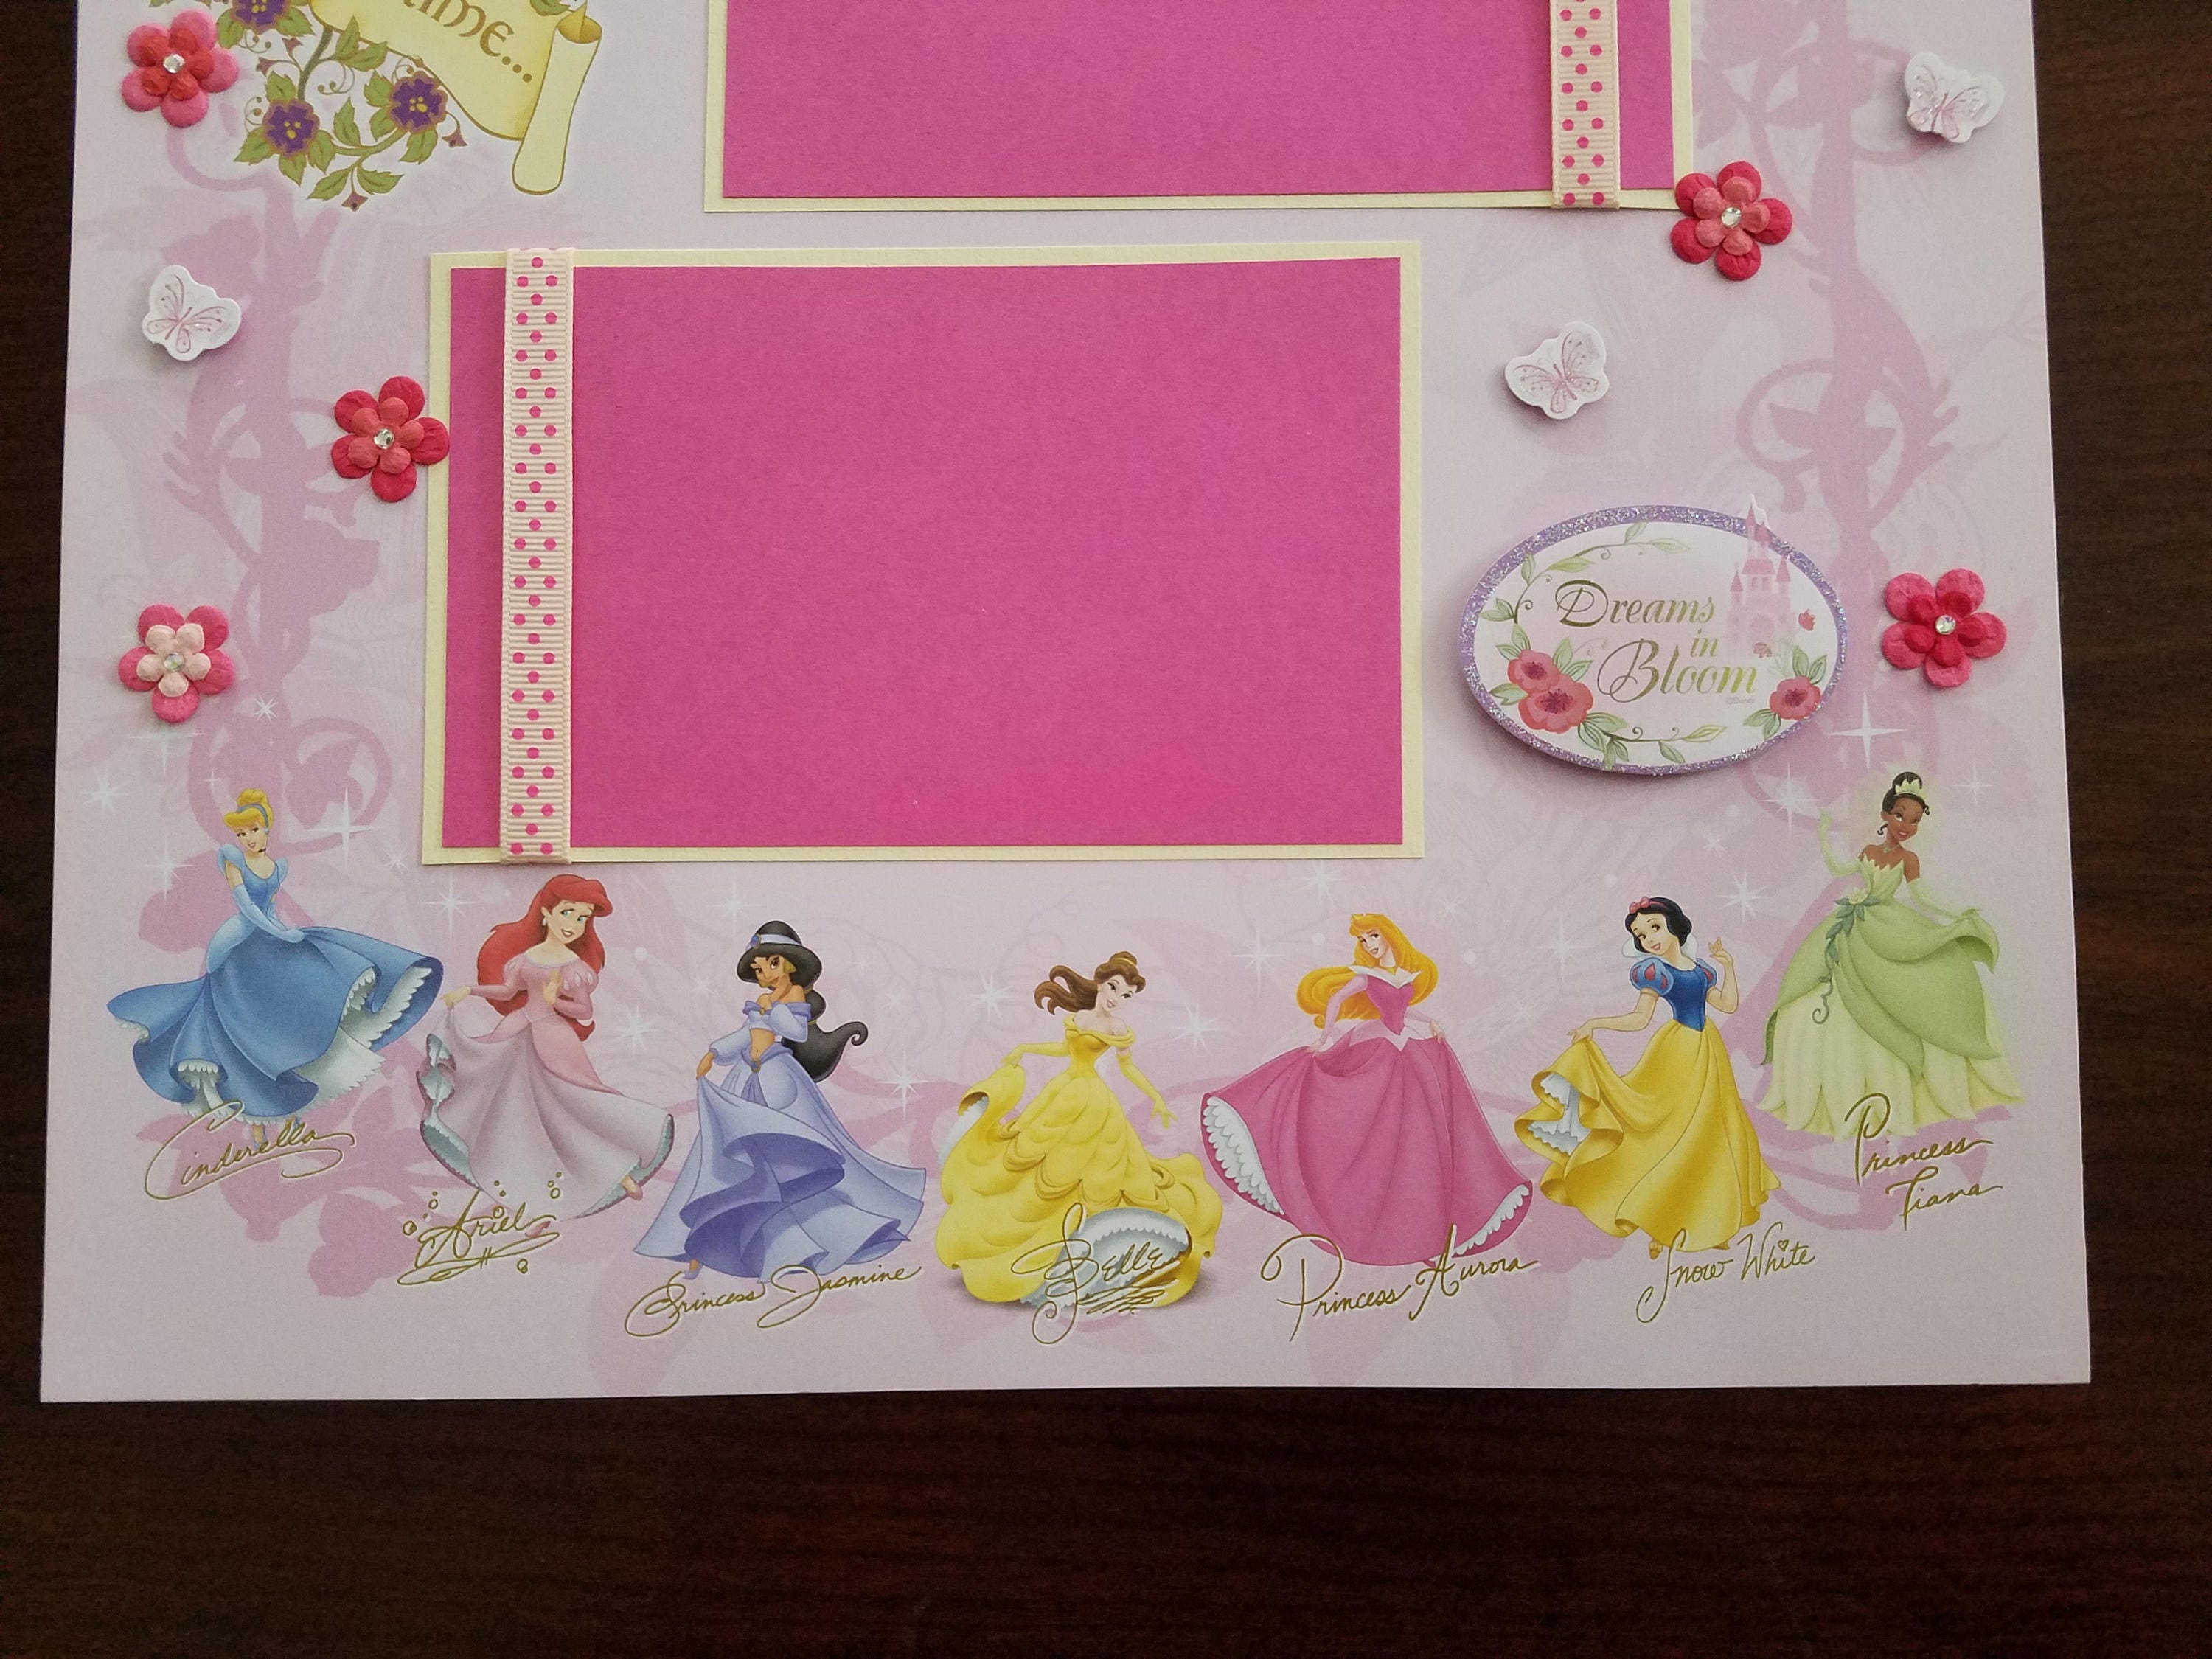 Petticoat Parlor Scrapbooking Supplies: Land - Disney Full Page